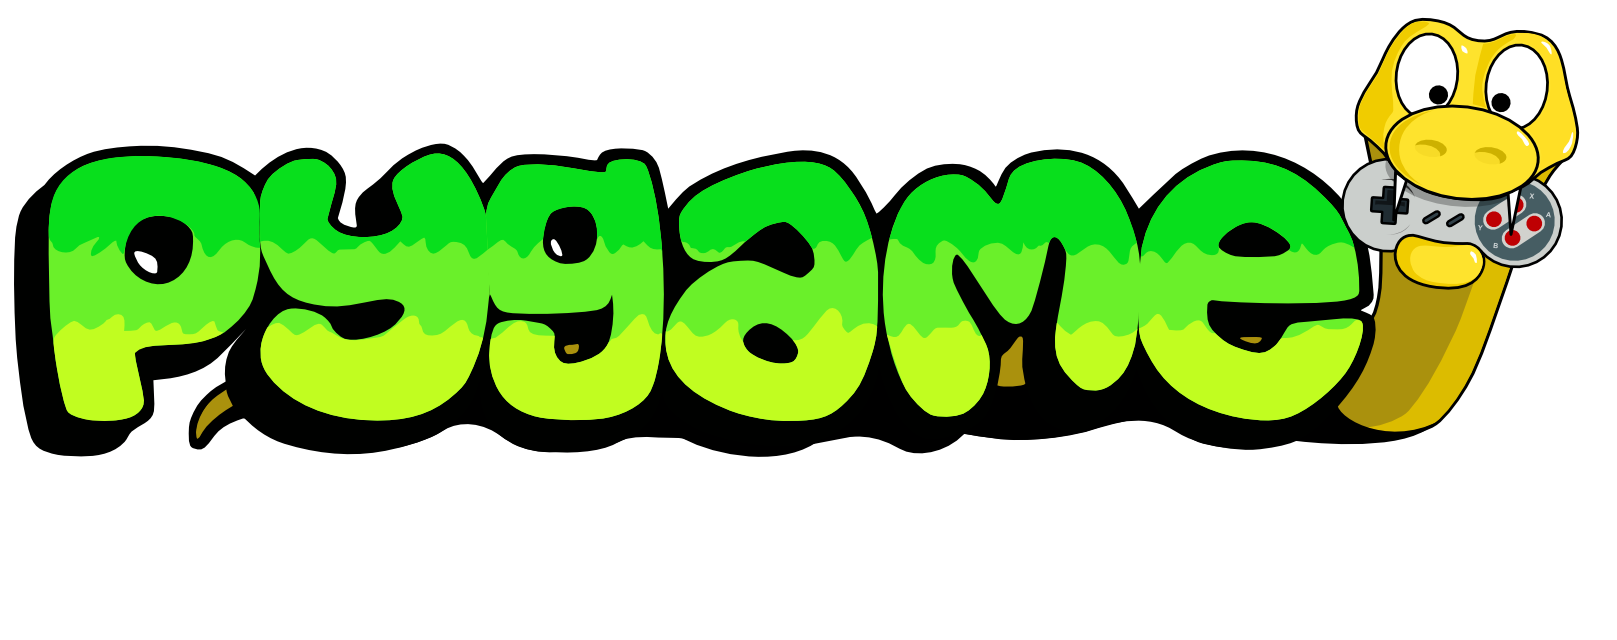 Pygame. Картинки для Pygame. Библиотека Pygame Python. Pygame логотип. Игры на библиотеке pygame